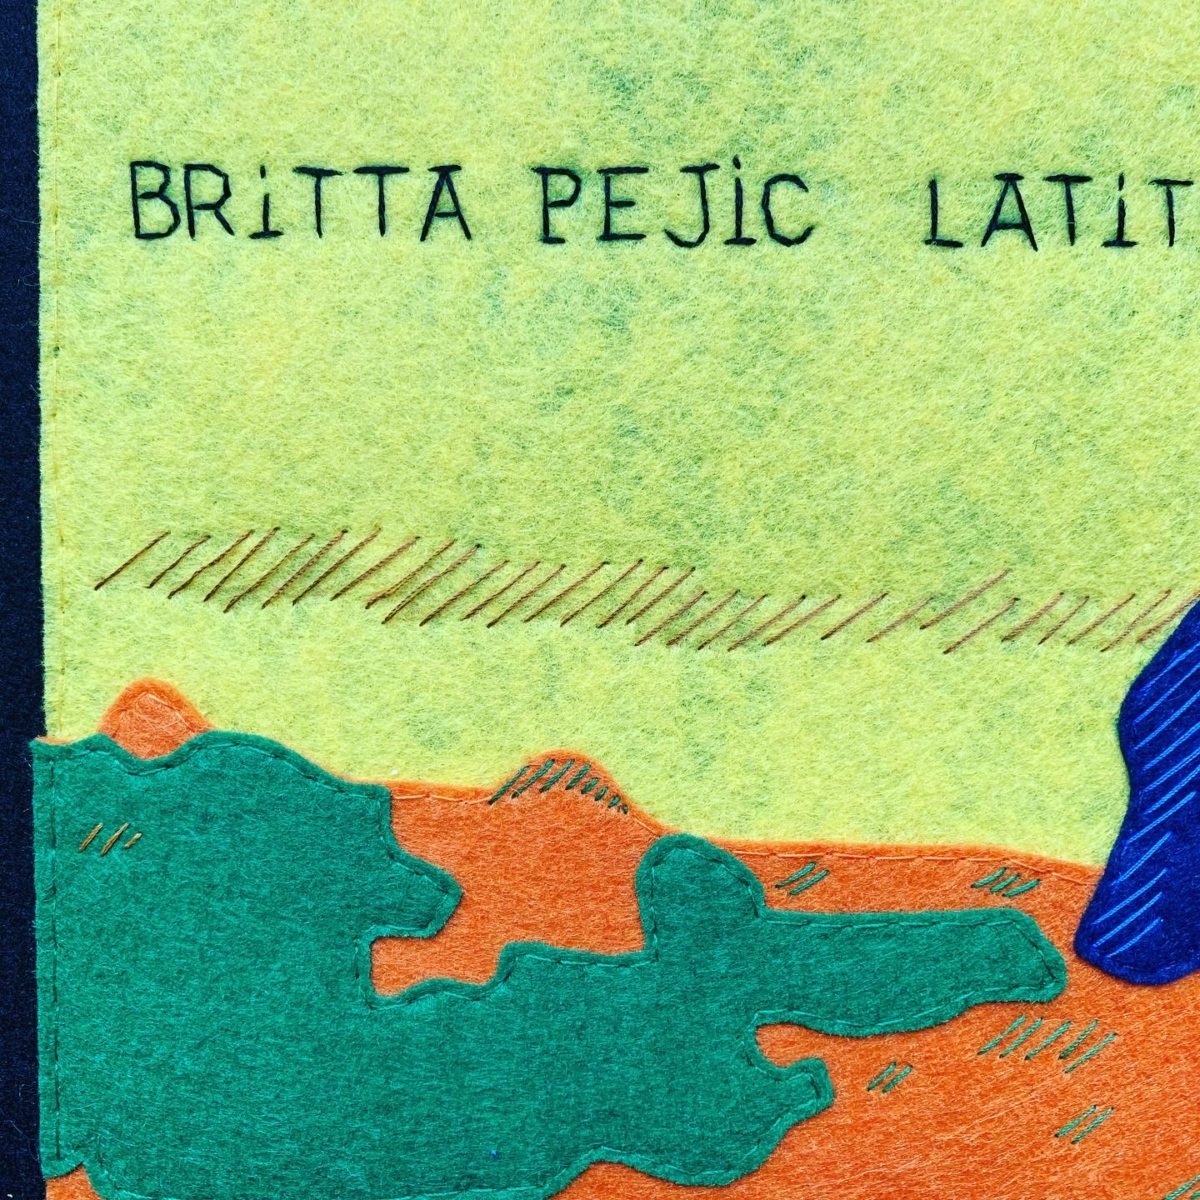 Britta Peijic - Latitude Bera (2020)